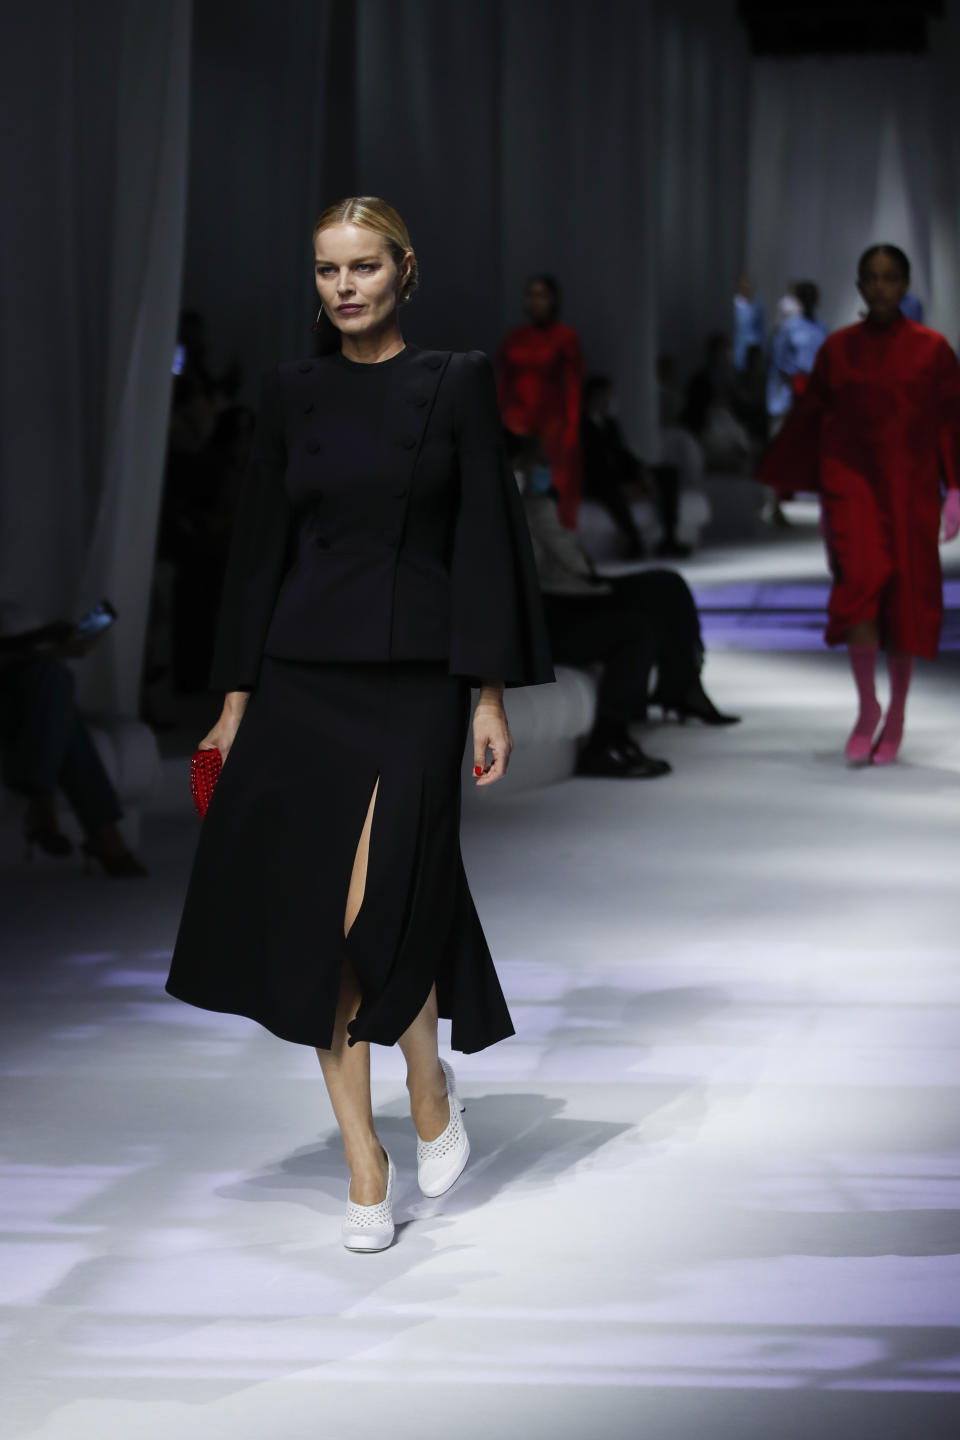 Model Eva Herzigova wears a creation as part of the Fendi 2021 women's spring-summer ready-to-wear collection during the Milan's fashion week in Milan, Italy, Wednesday, Sept. 23, 2020. (AP Photo/Antonio Calanni)